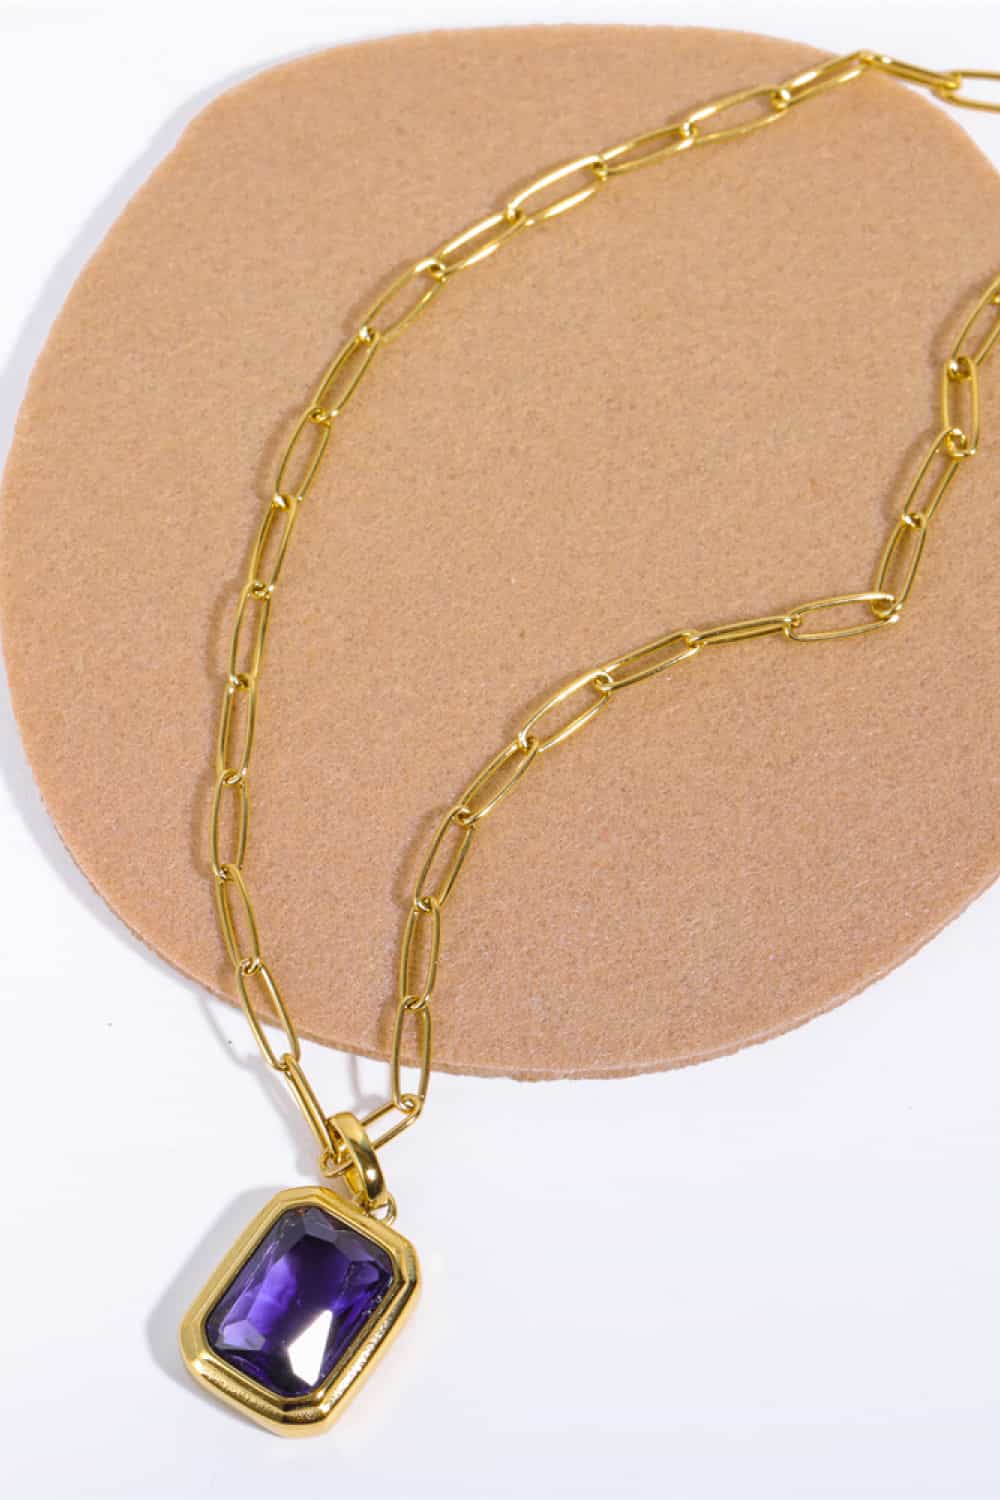 Zircon 18K Gold-Plated Geometrical Shape Pendant Necklace - CLASSY CLOSET BOUTIQUEZircon 18K Gold-Plated Geometrical Shape Pendant Necklacejewelry101300081310931101300081310931PurpleOne Size